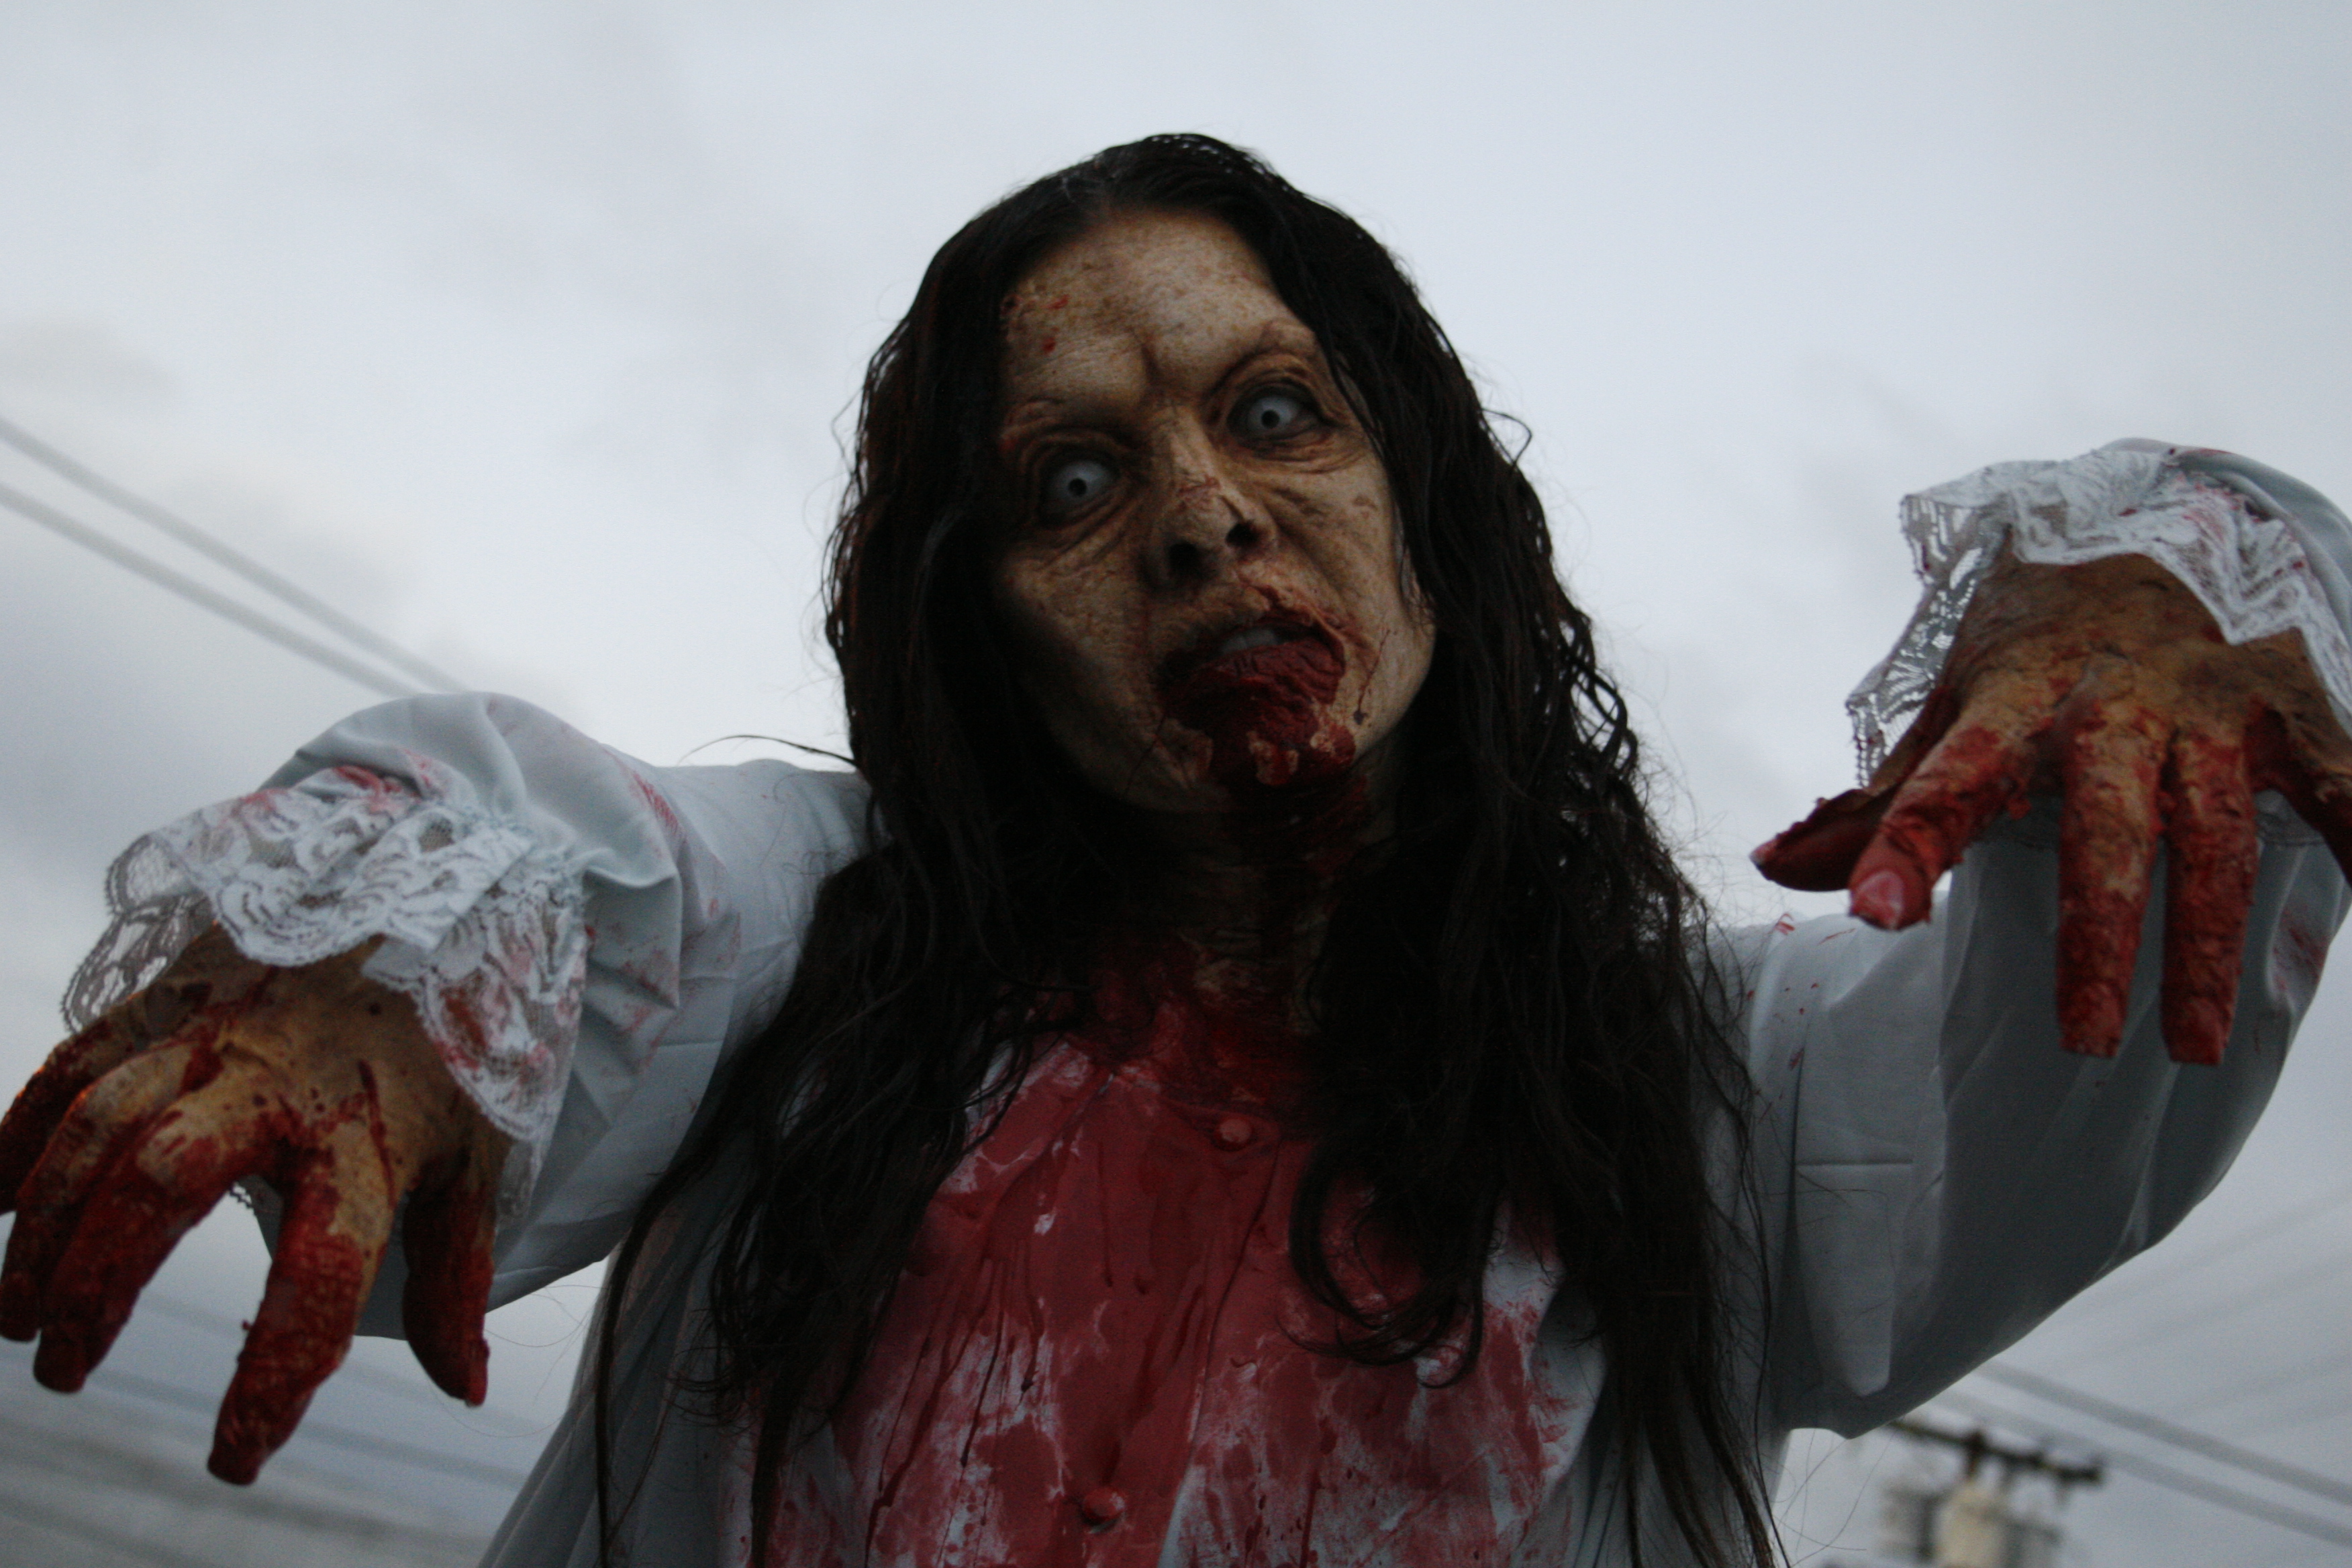 ILLUSION INDUSTRIES Zombie Design Make Up FX Test- Brooke Lewis